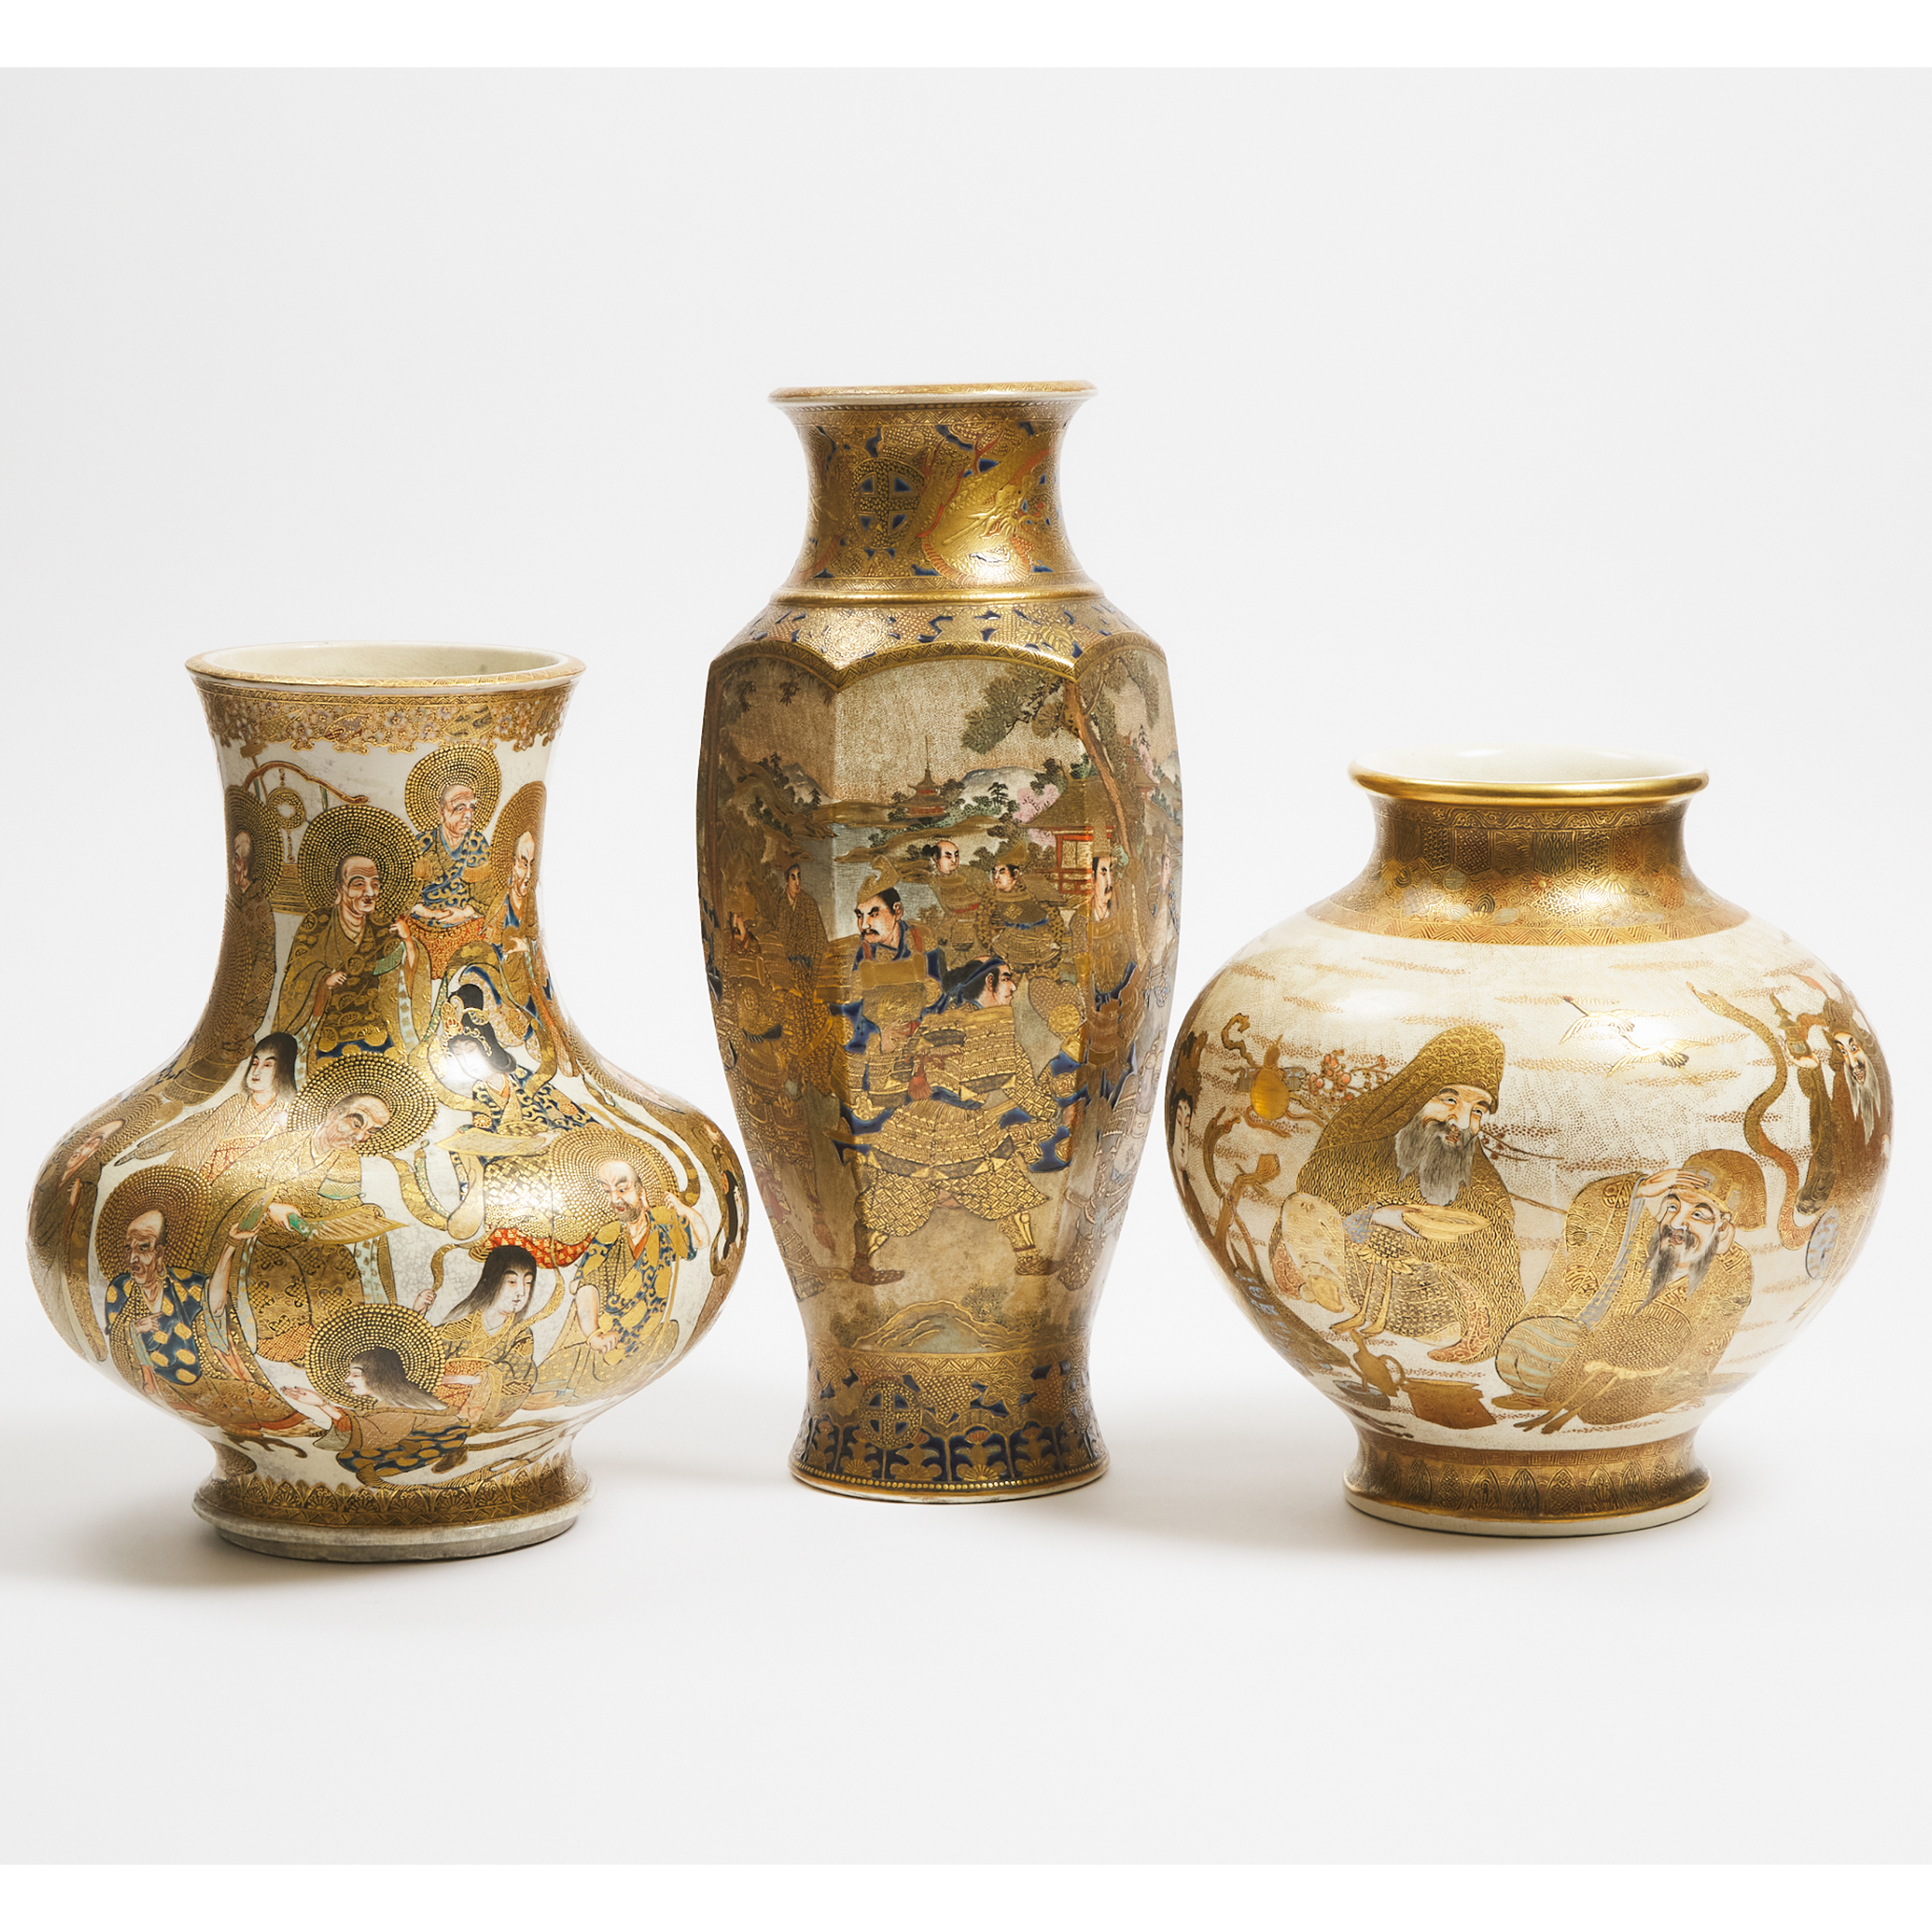 A Group of Three Large Satsuma Vases, Meiji Period (1868-1912)